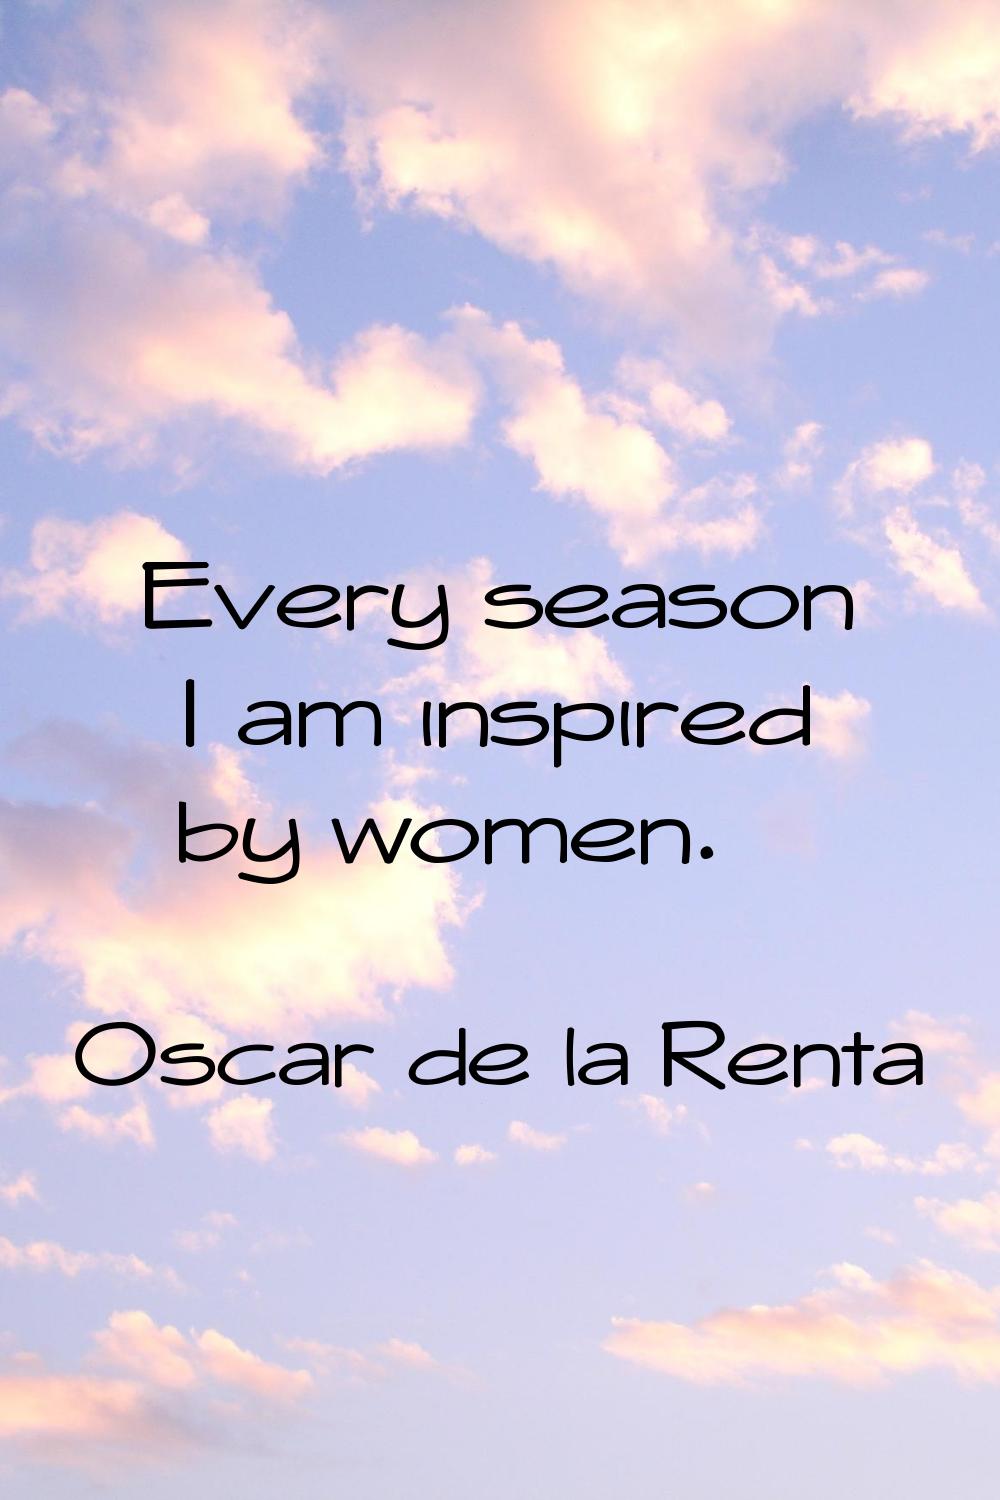 Every season I am inspired by women.